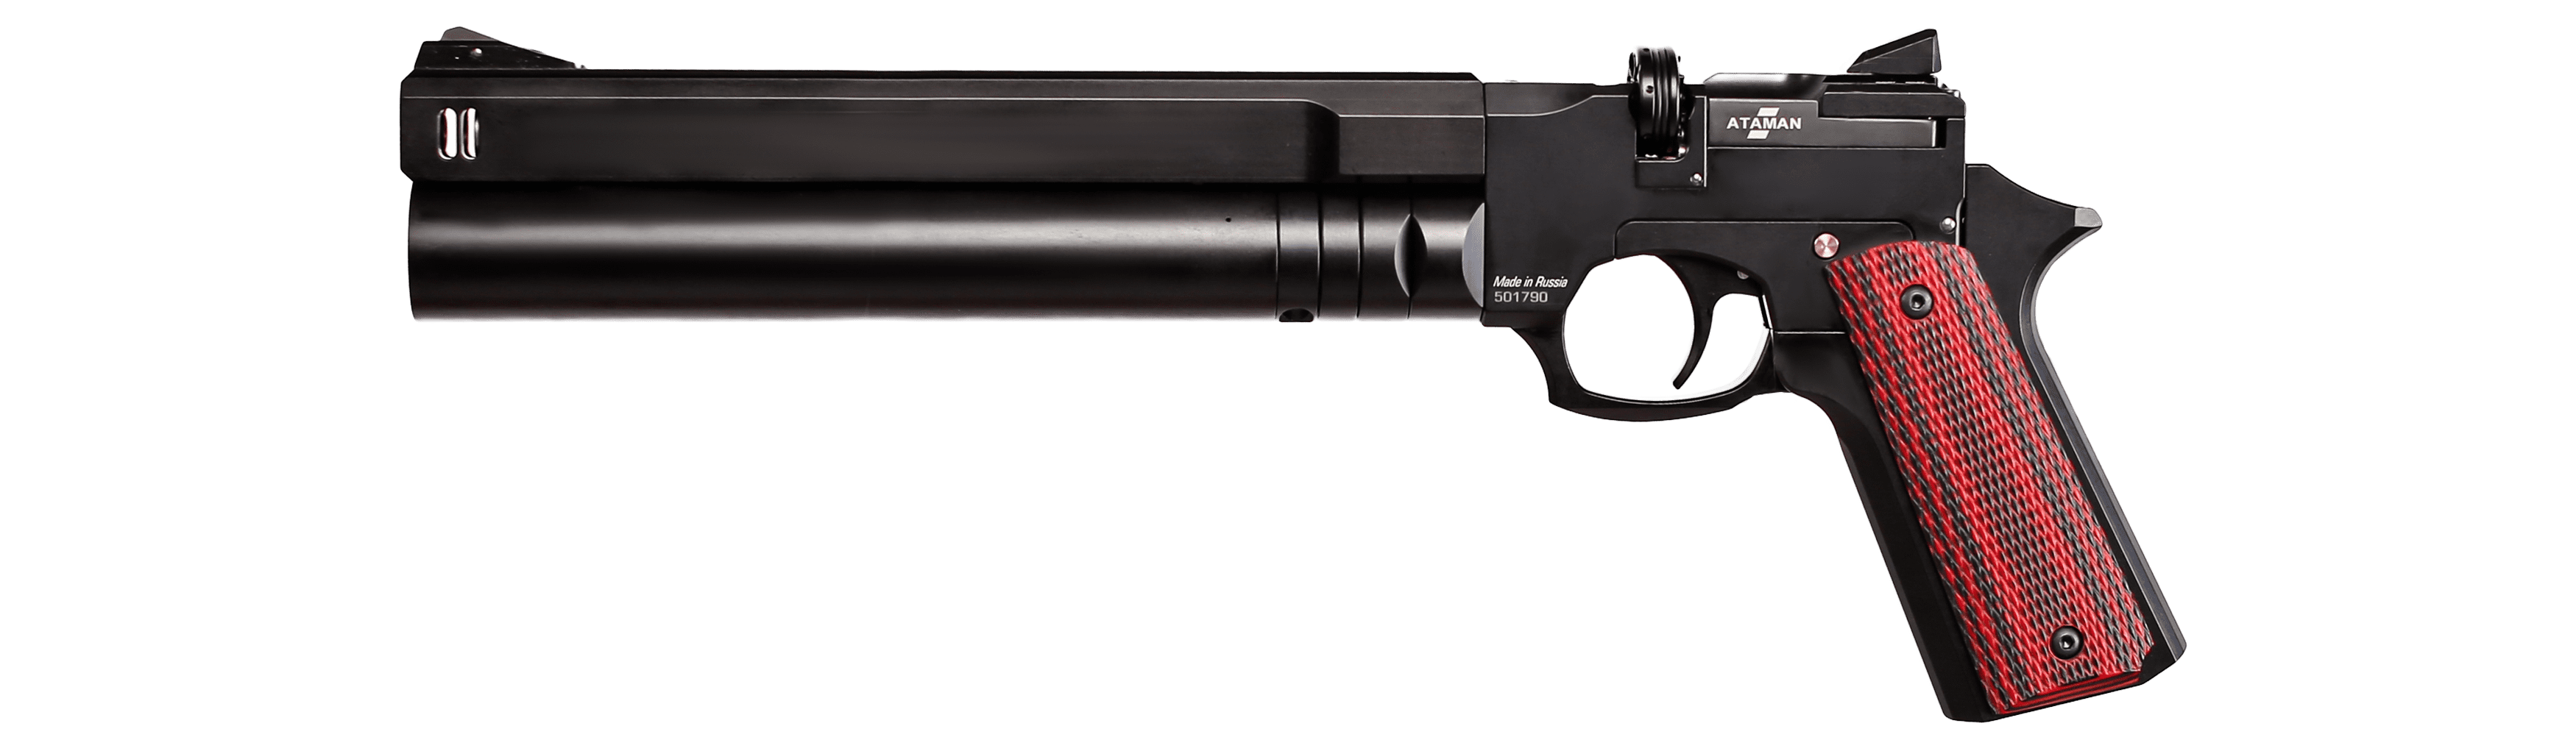 Пневматический PCP пистолет ATAMAN AP16 Black Standart (рукоятка Metal), кал. 4.5мм